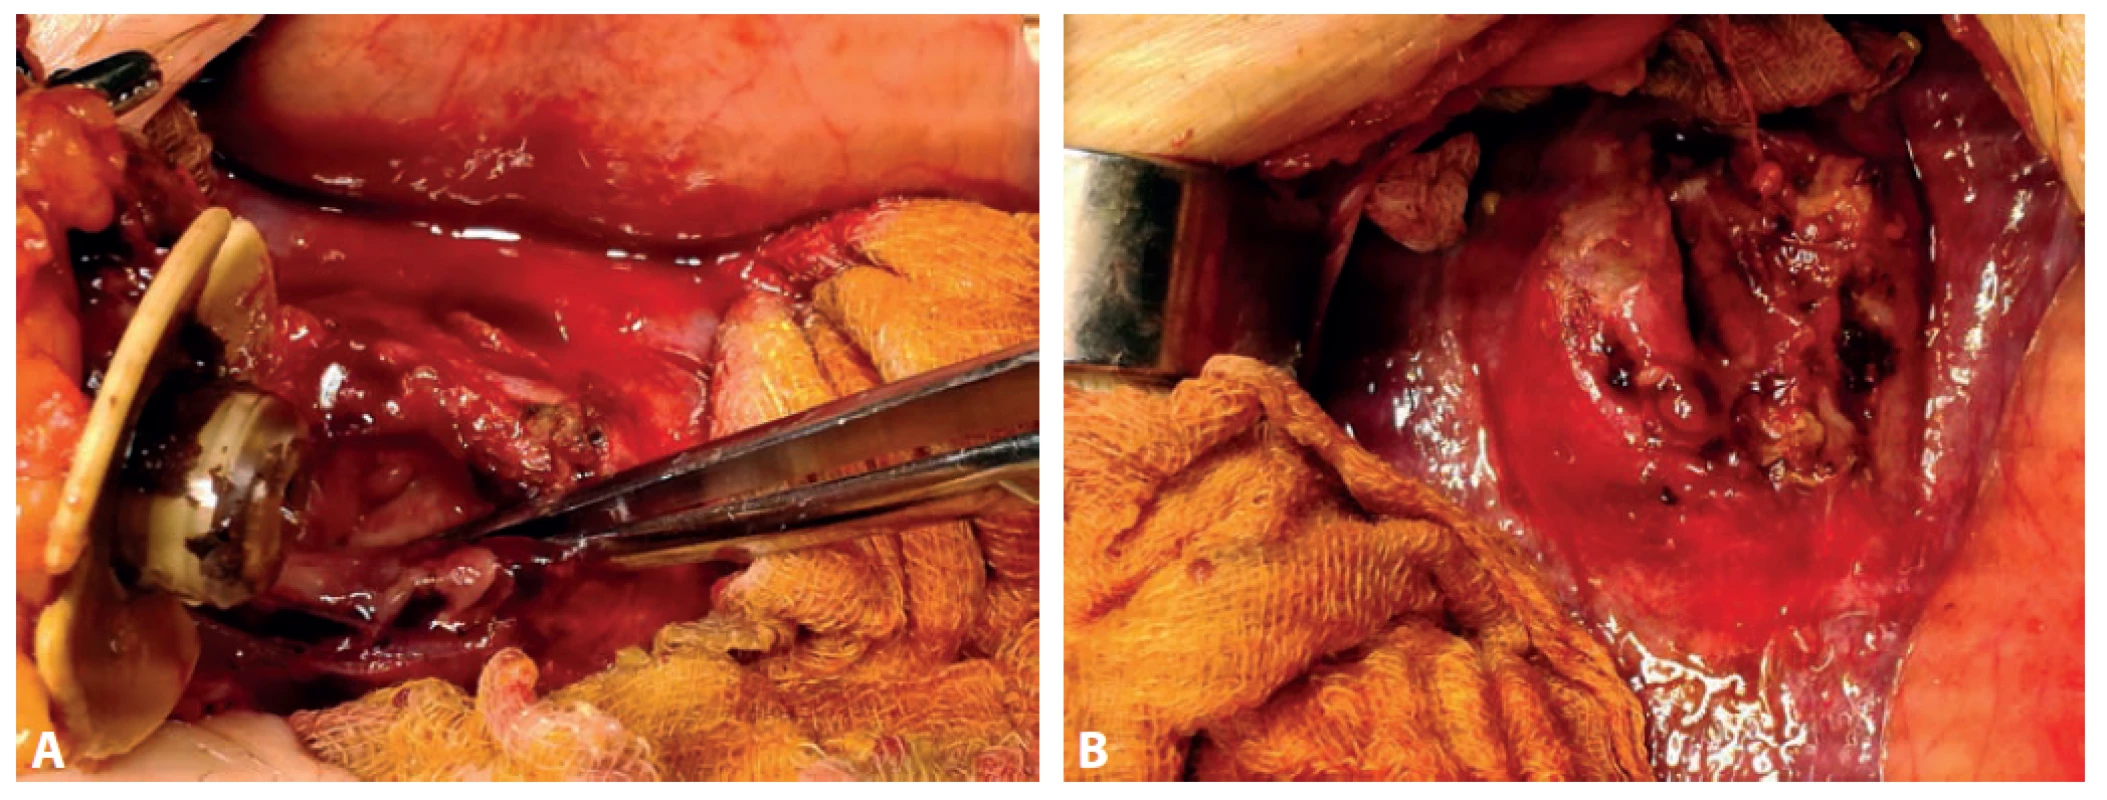 Peroperačný nález dislokovaného PEG do S2 heparu (a) s abscesovou dutinou (b)<br>
Fig. 2. Peroperative fi nding of dislocated PEG to S2 of the liver (a) with abscess cavity (b)